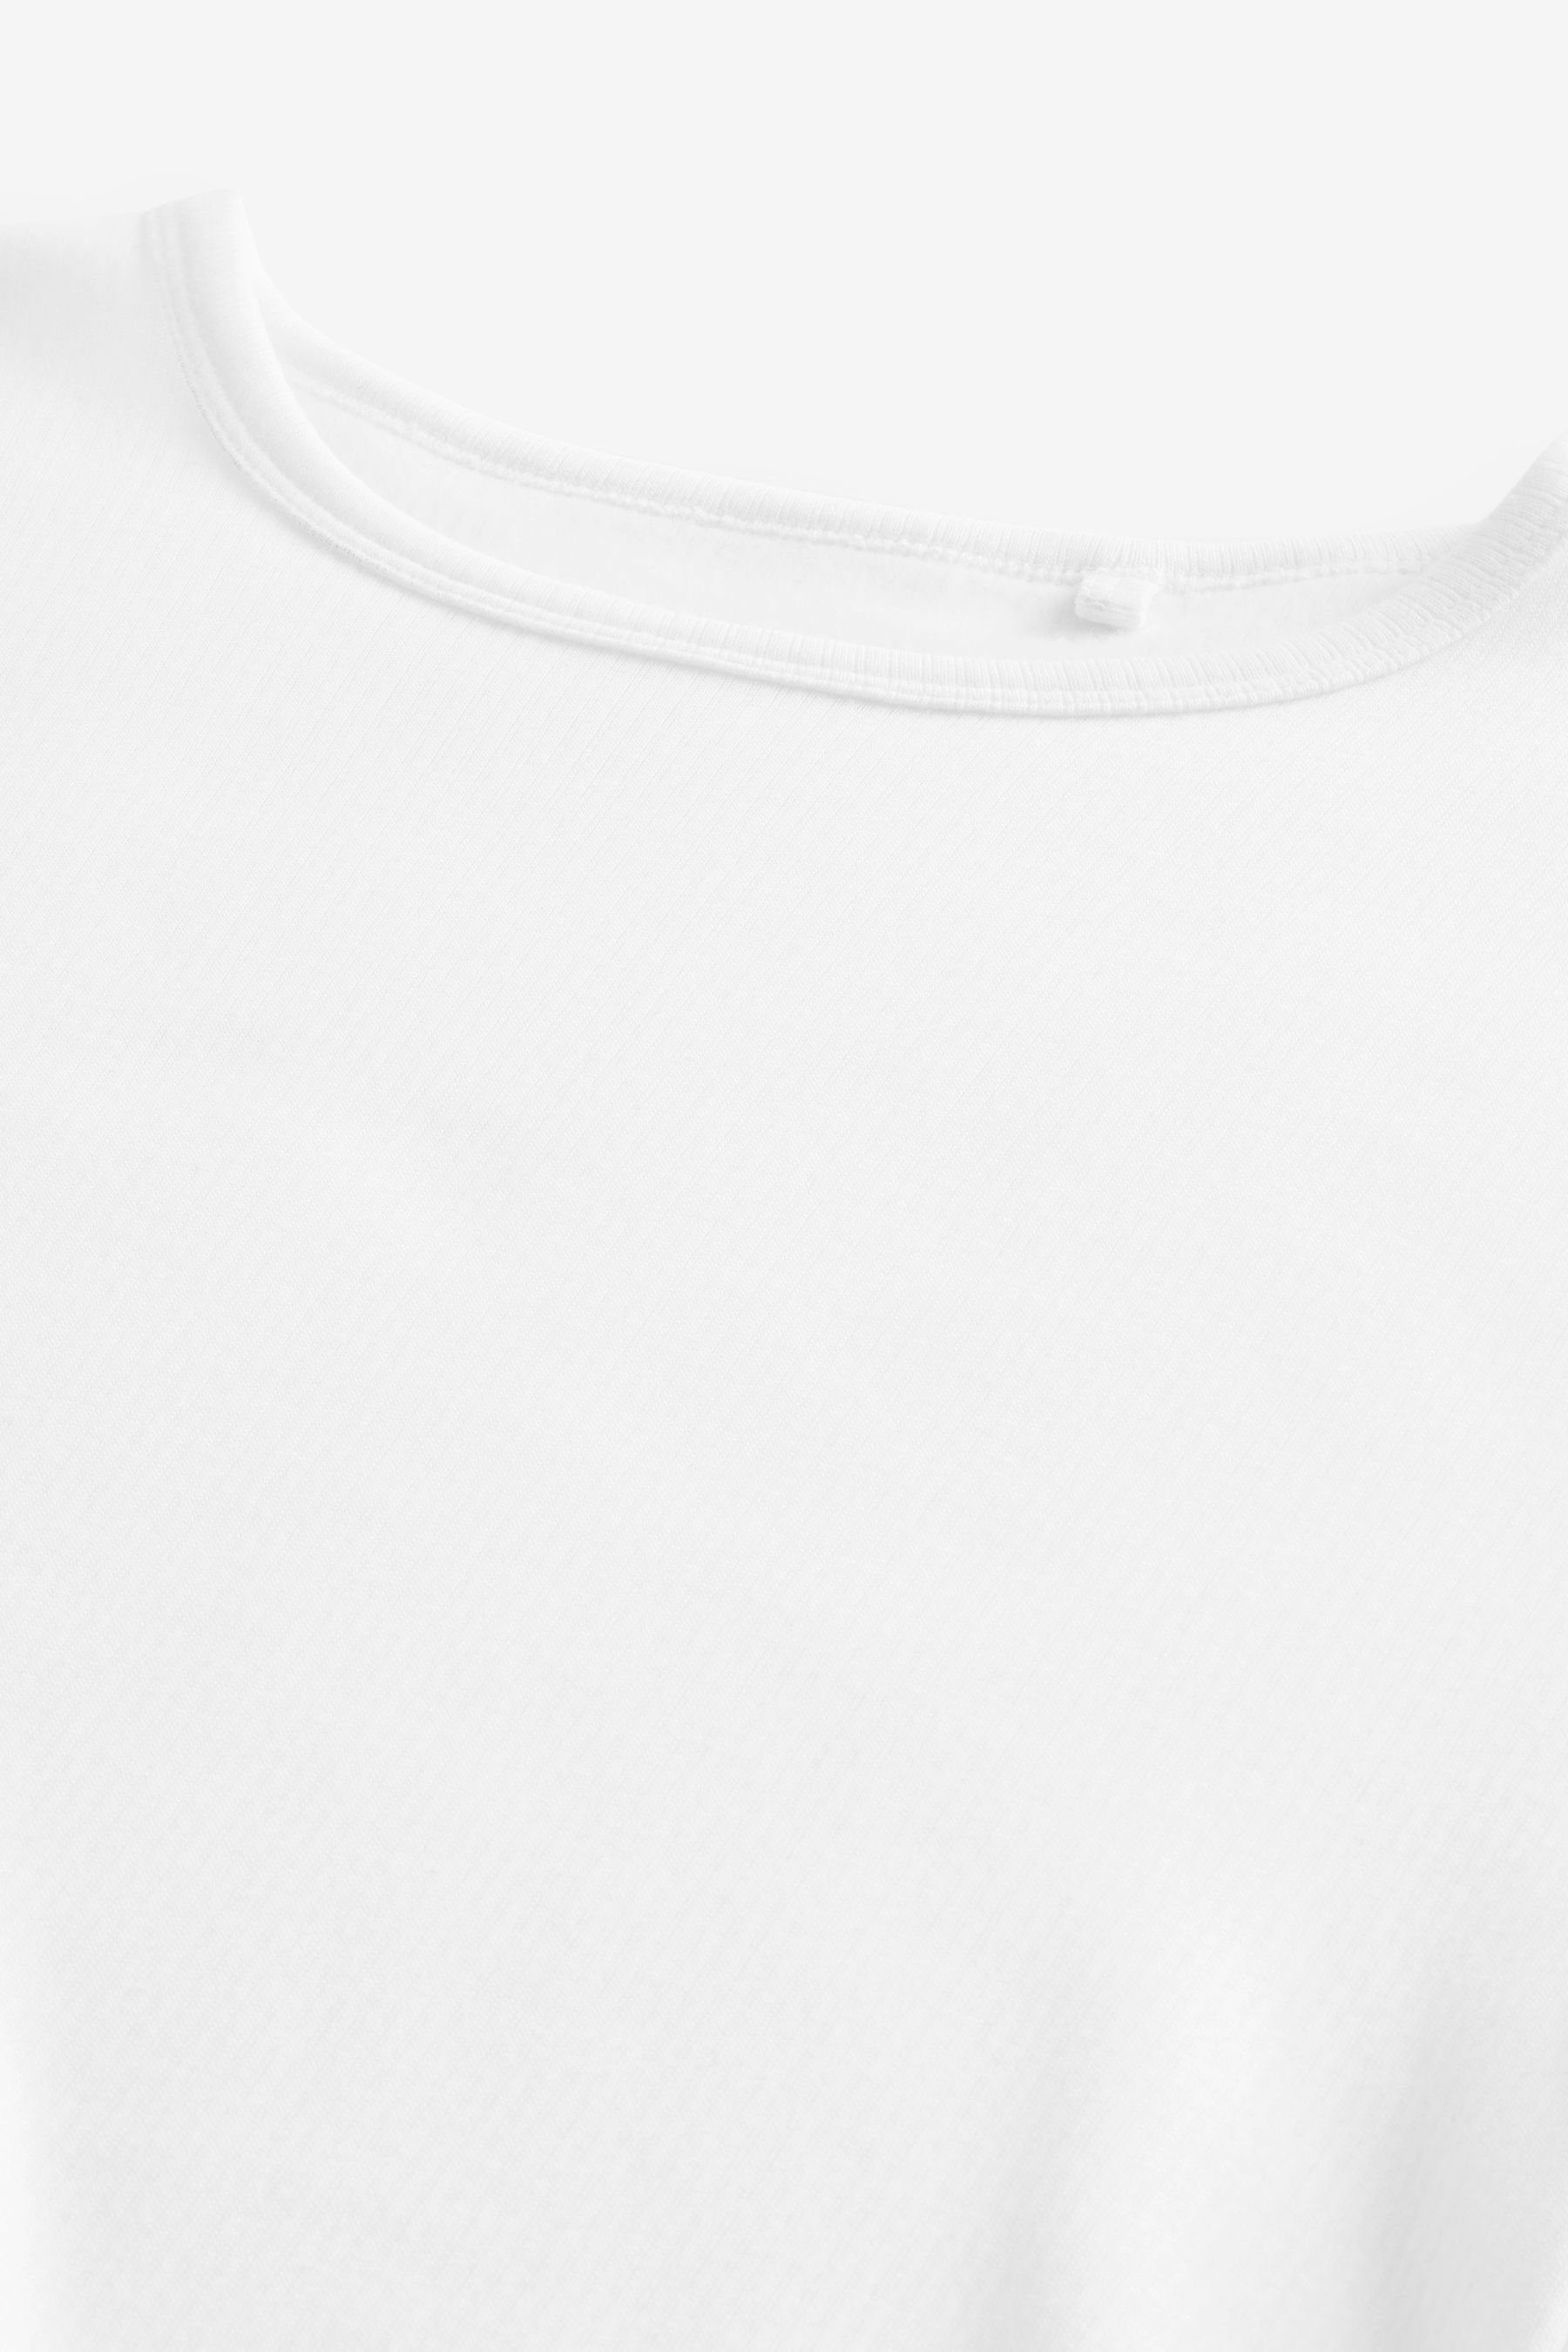 2er-Pack White Next (2-St) Thermoshirts, Thermounterhemd Kurze